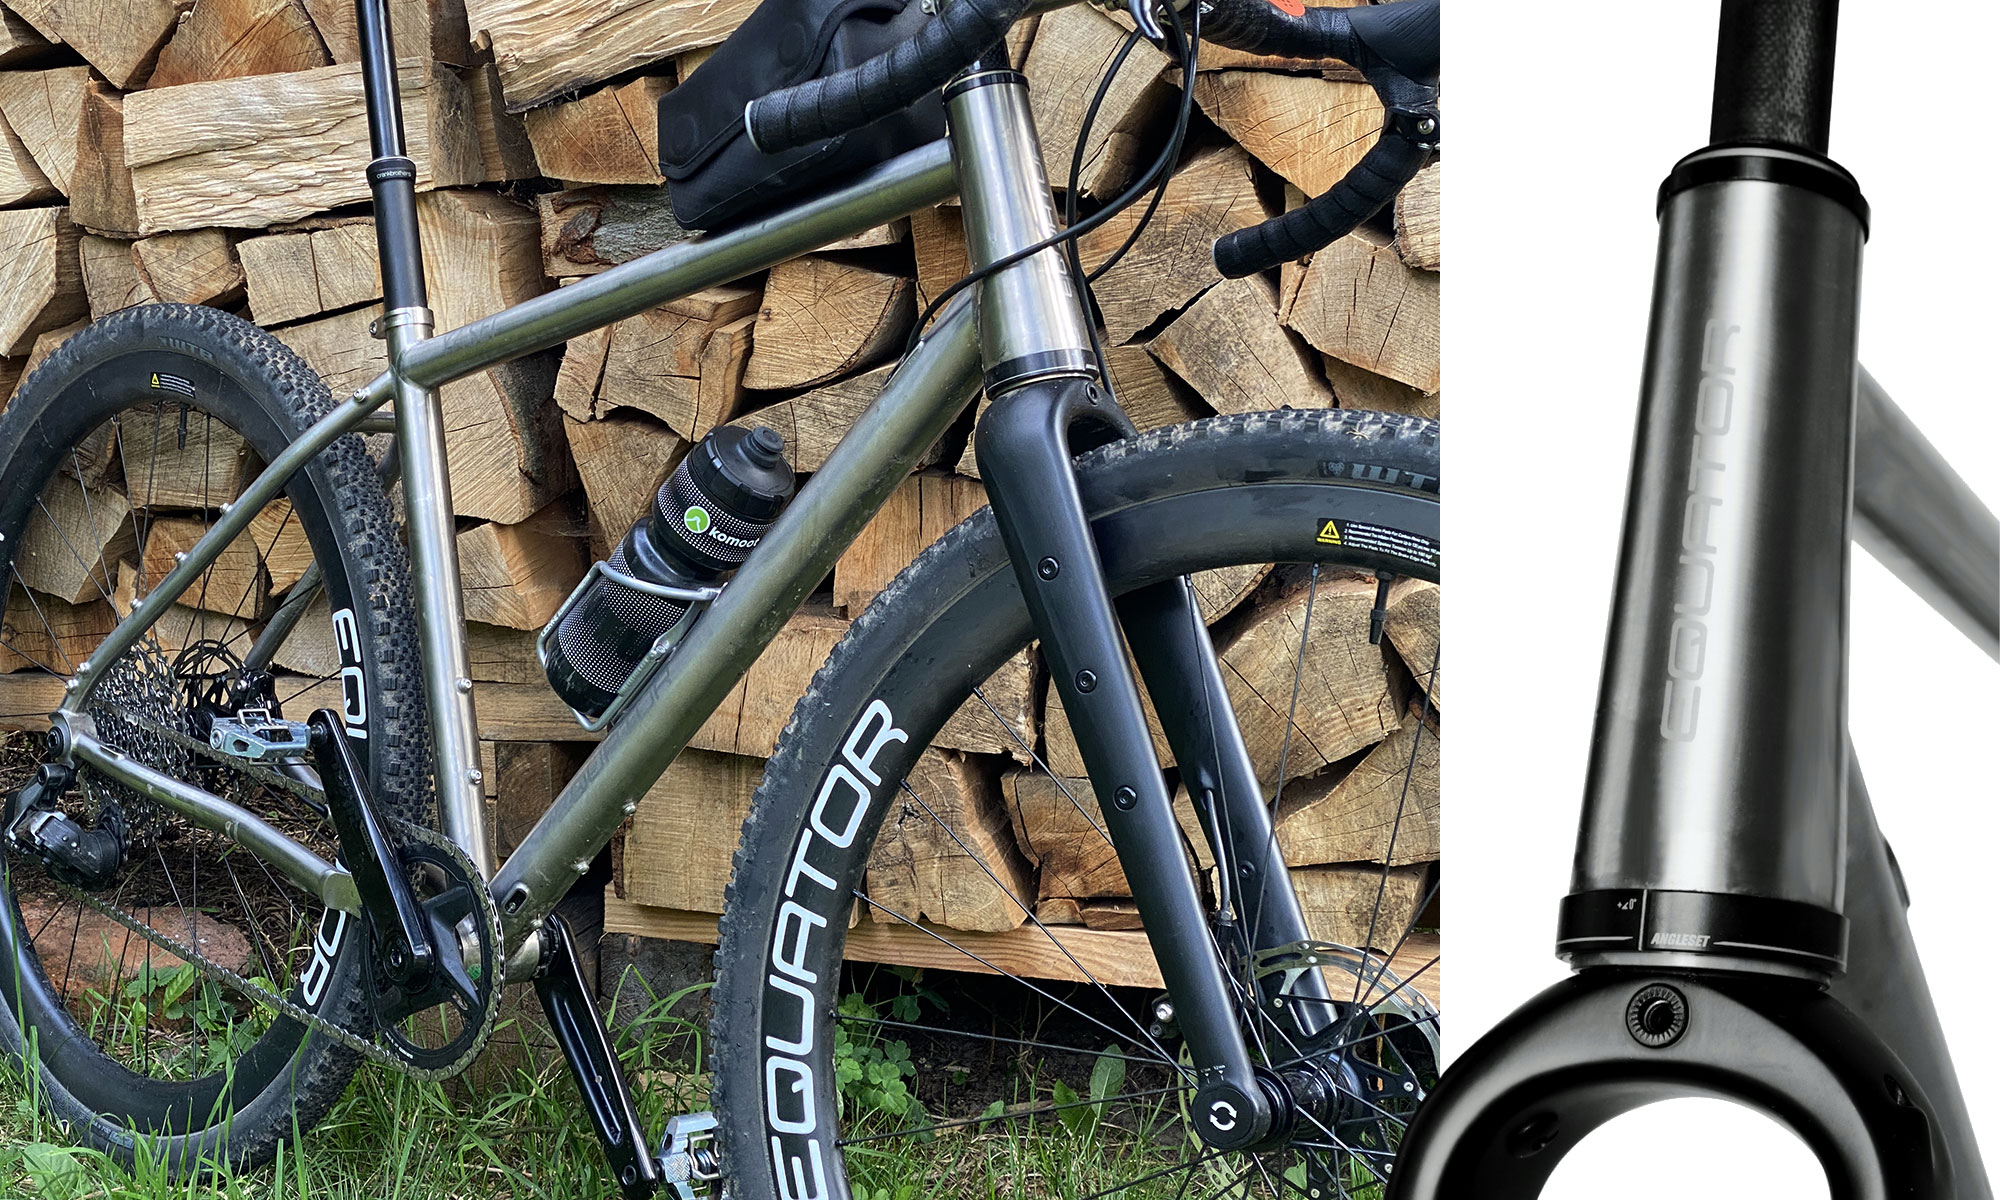 Equator Yasei titanium affordable gravel bike review, tapered headtube & adjustable headset angle